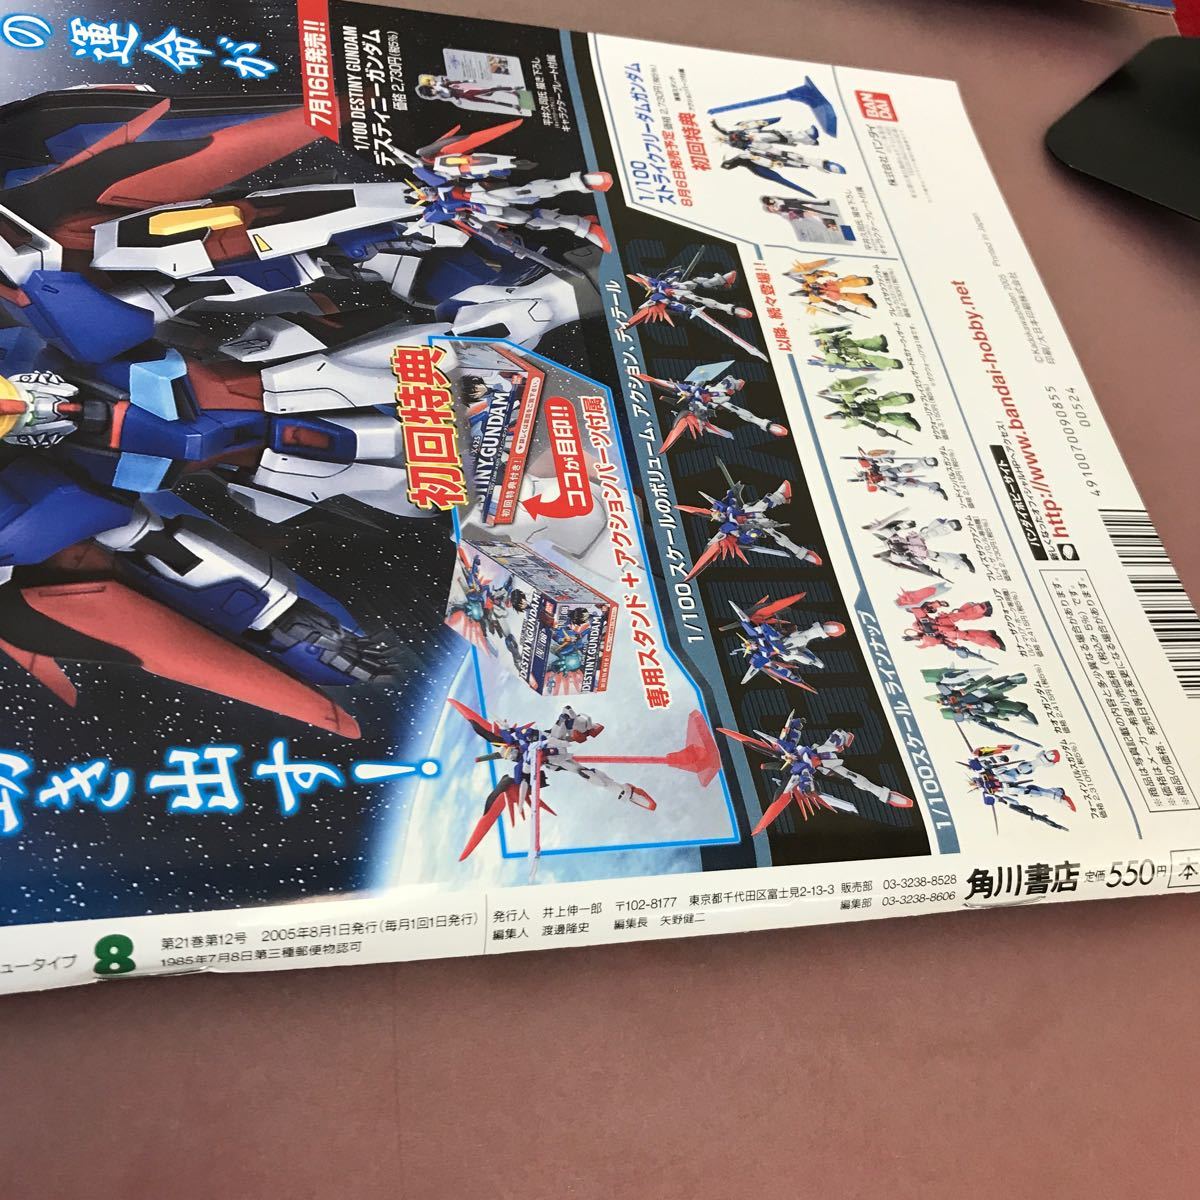 E61-107 Newtype monthly Newtype 2005.8 Kadokawa Shoten Gundam SEED DESTINYtoliniti*b Lad HOLIC other appendix attaching 